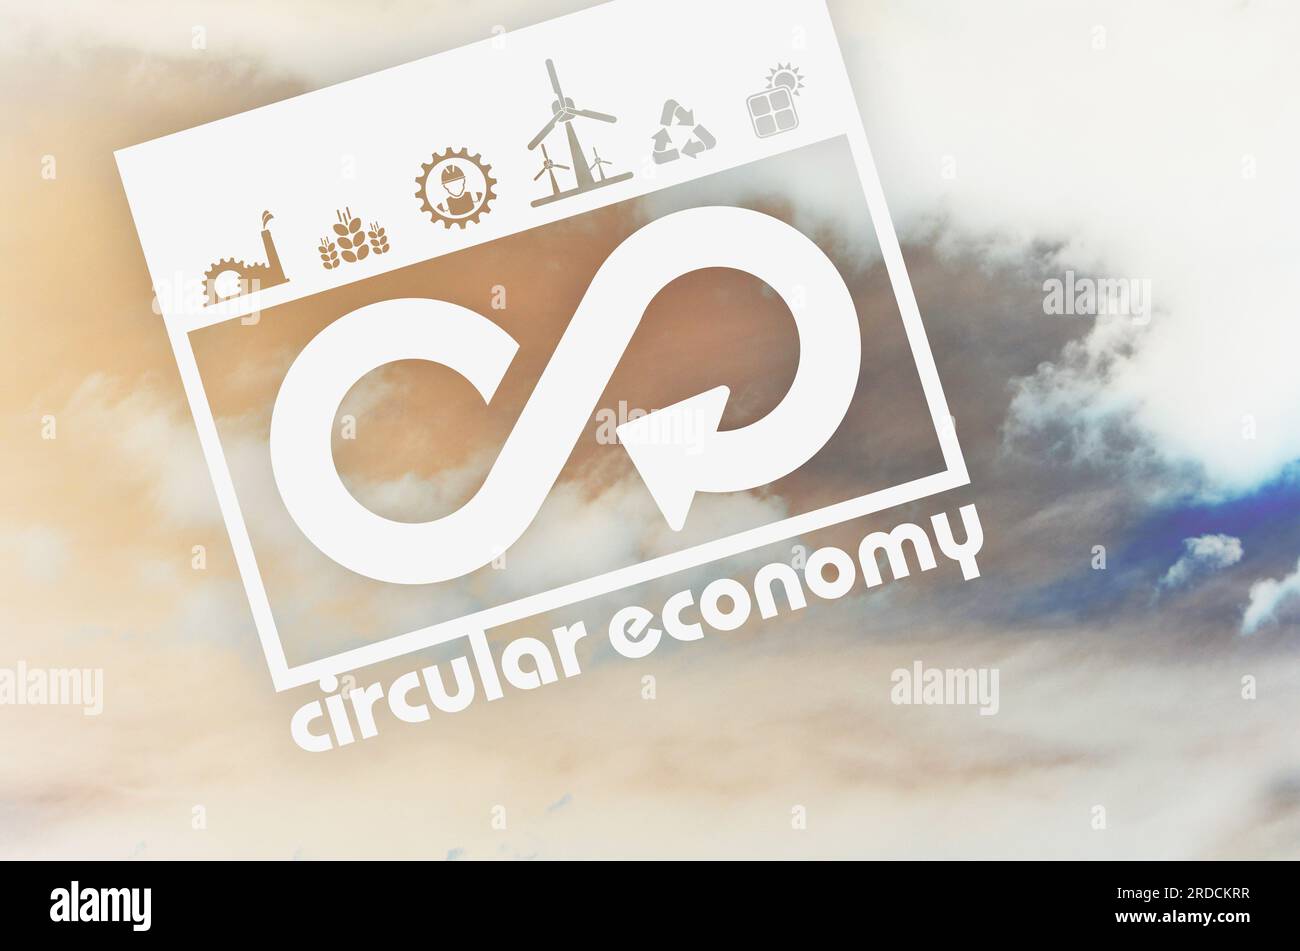 circular economy Stock Photo